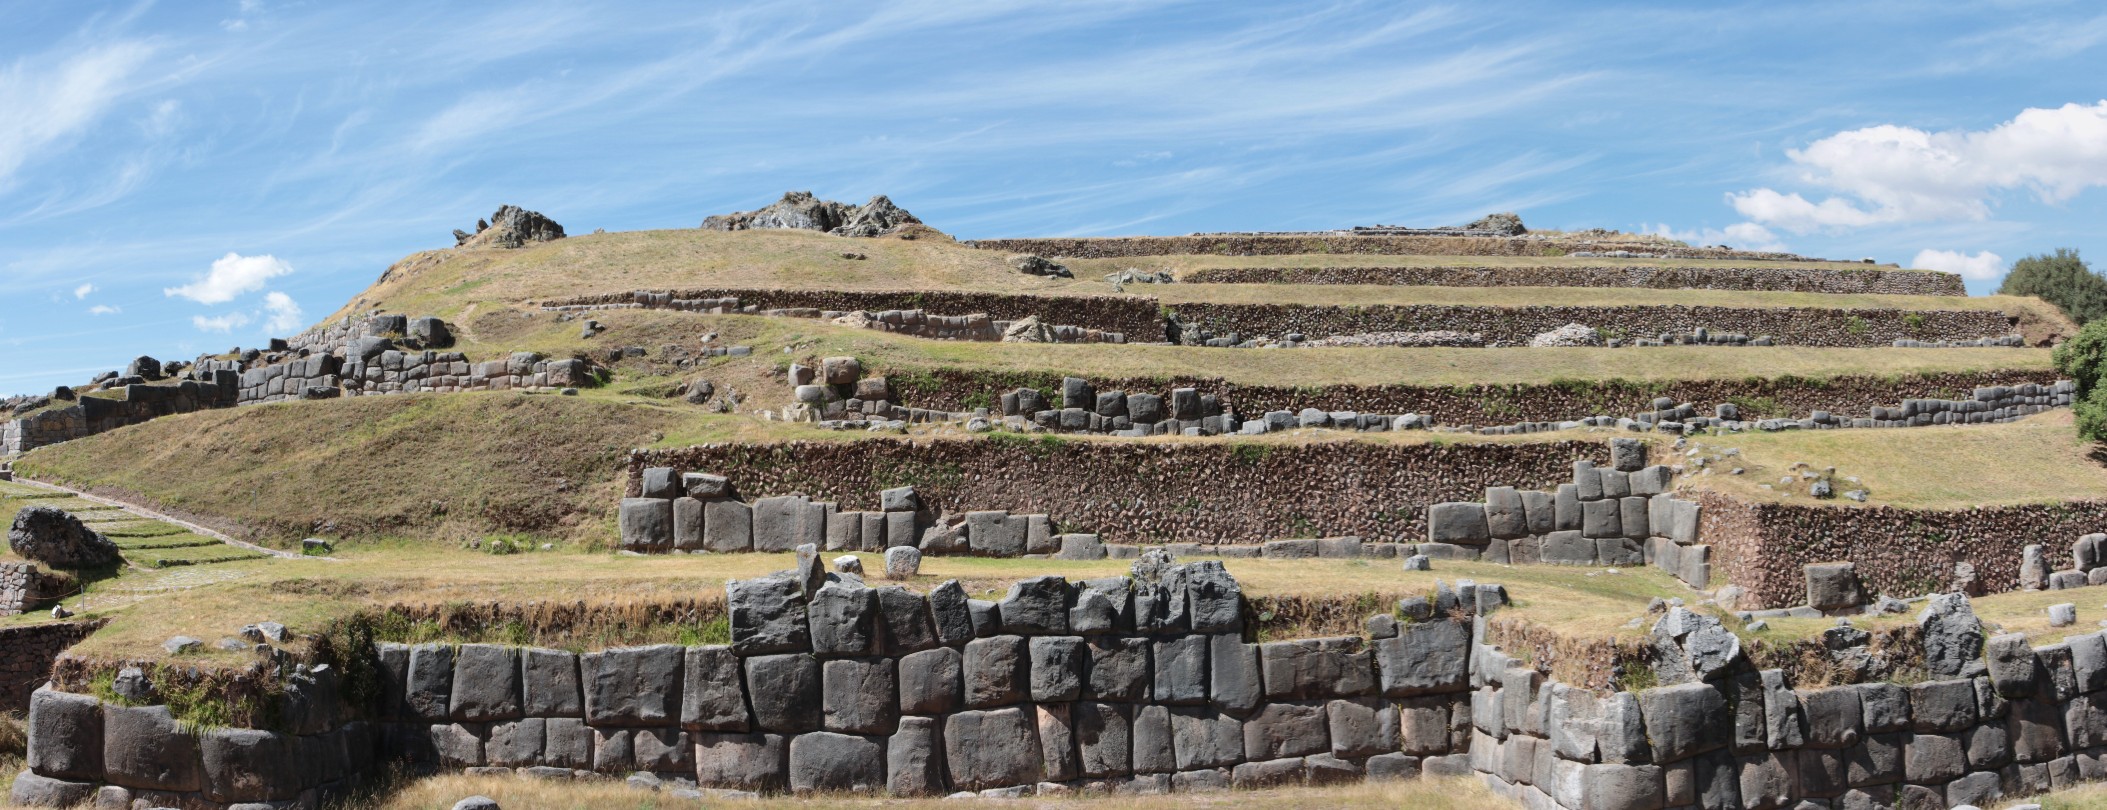 panorama-cuzco02.JPG